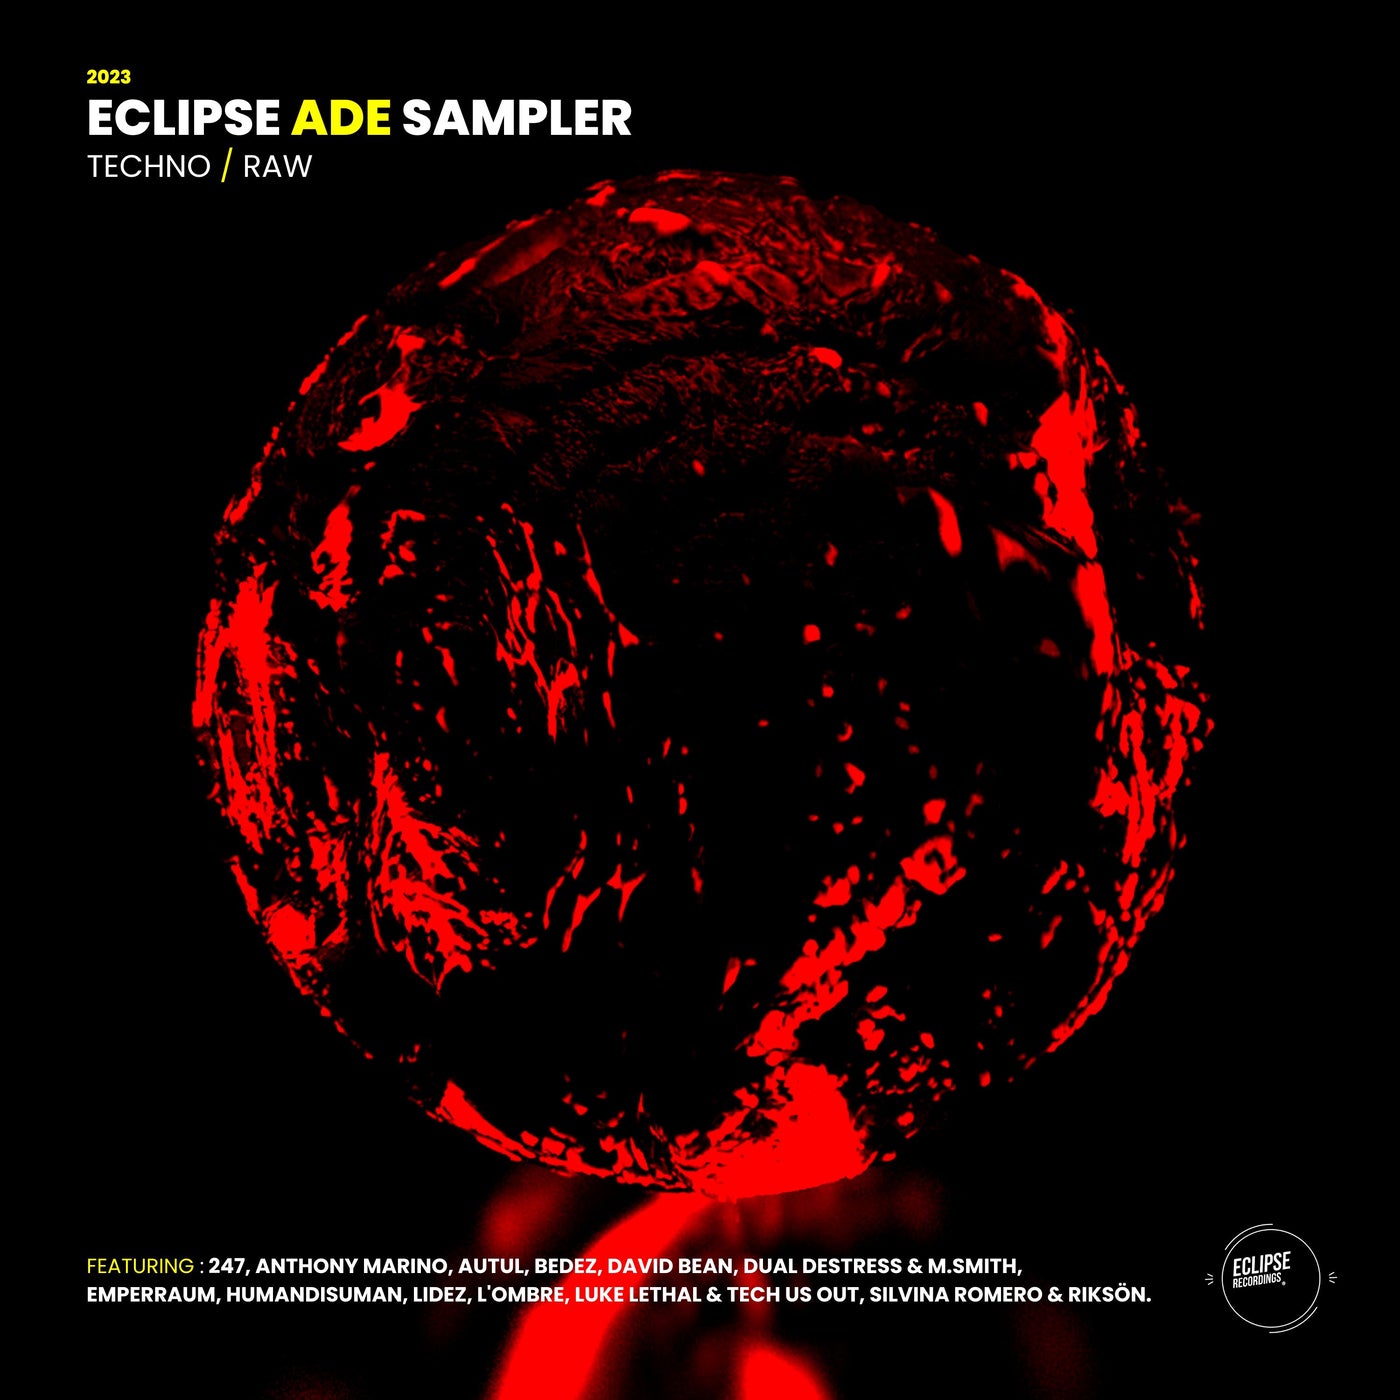 Eclipse ADE Sampler 2023 - Techno / Raw